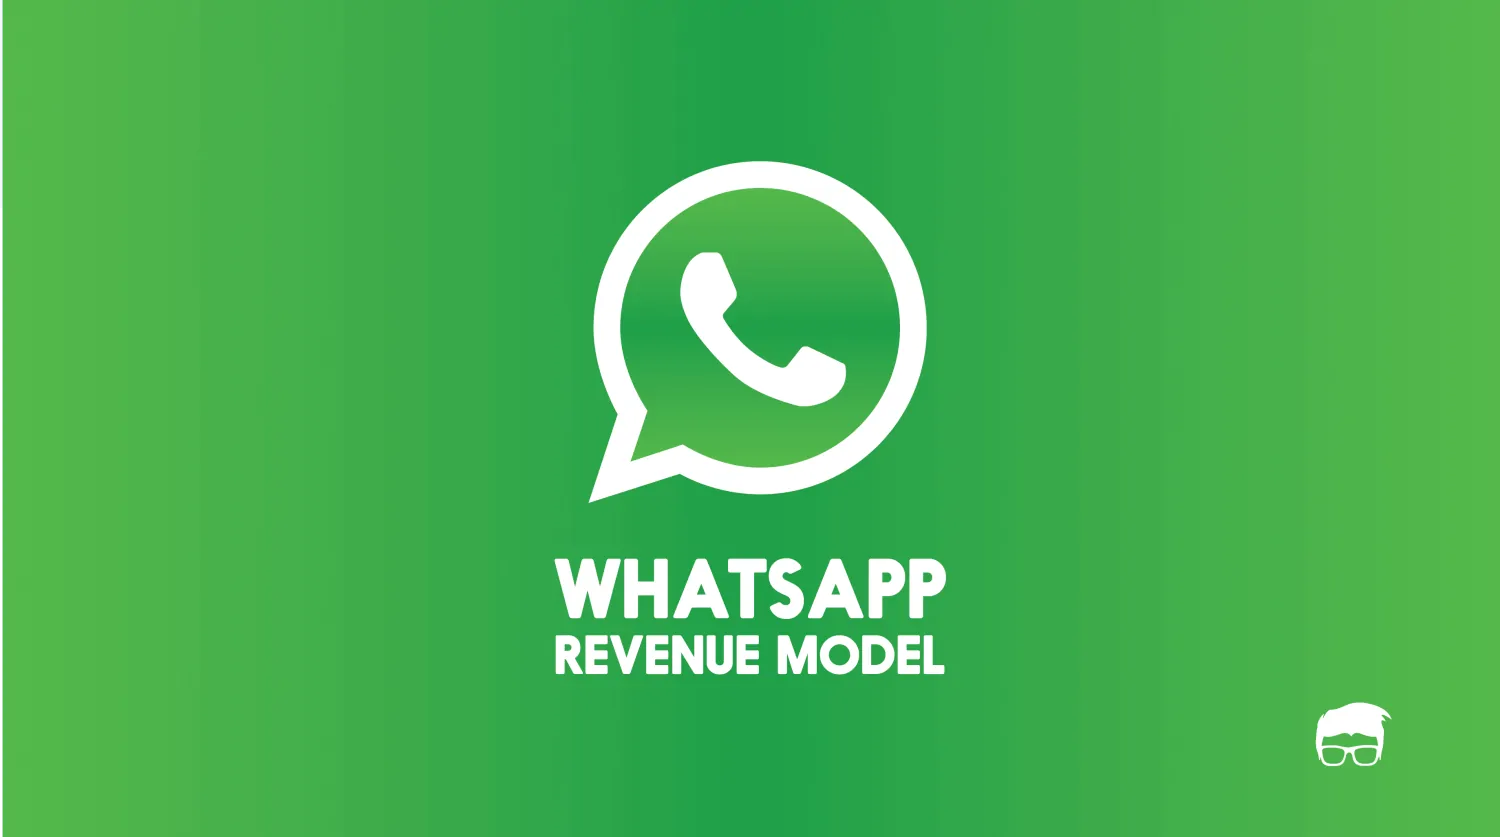 How Does WhatsApp Make Money? WhatsApp's Revenue Model